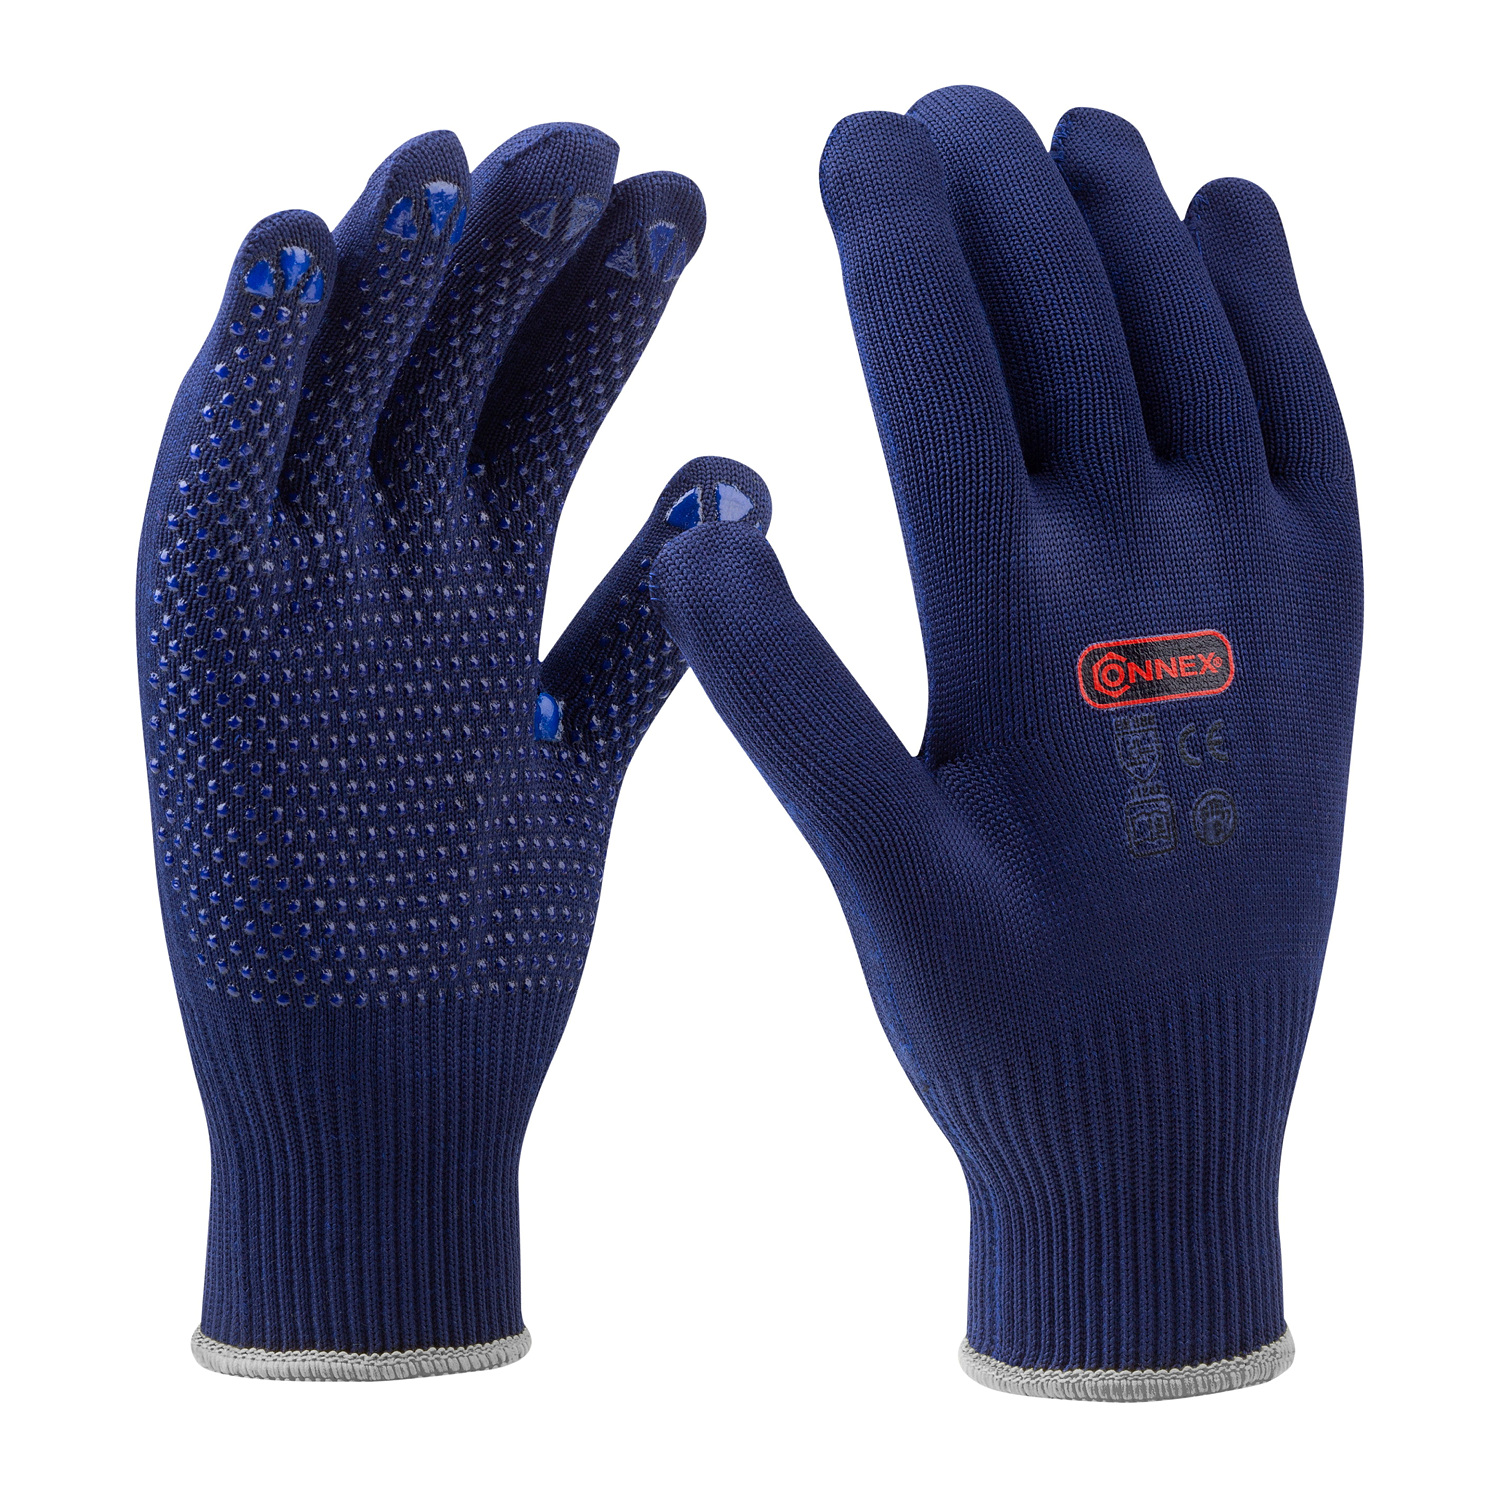 Connex Umzug 1 Handschuhe | 9 plus, Größe Paar, 302665